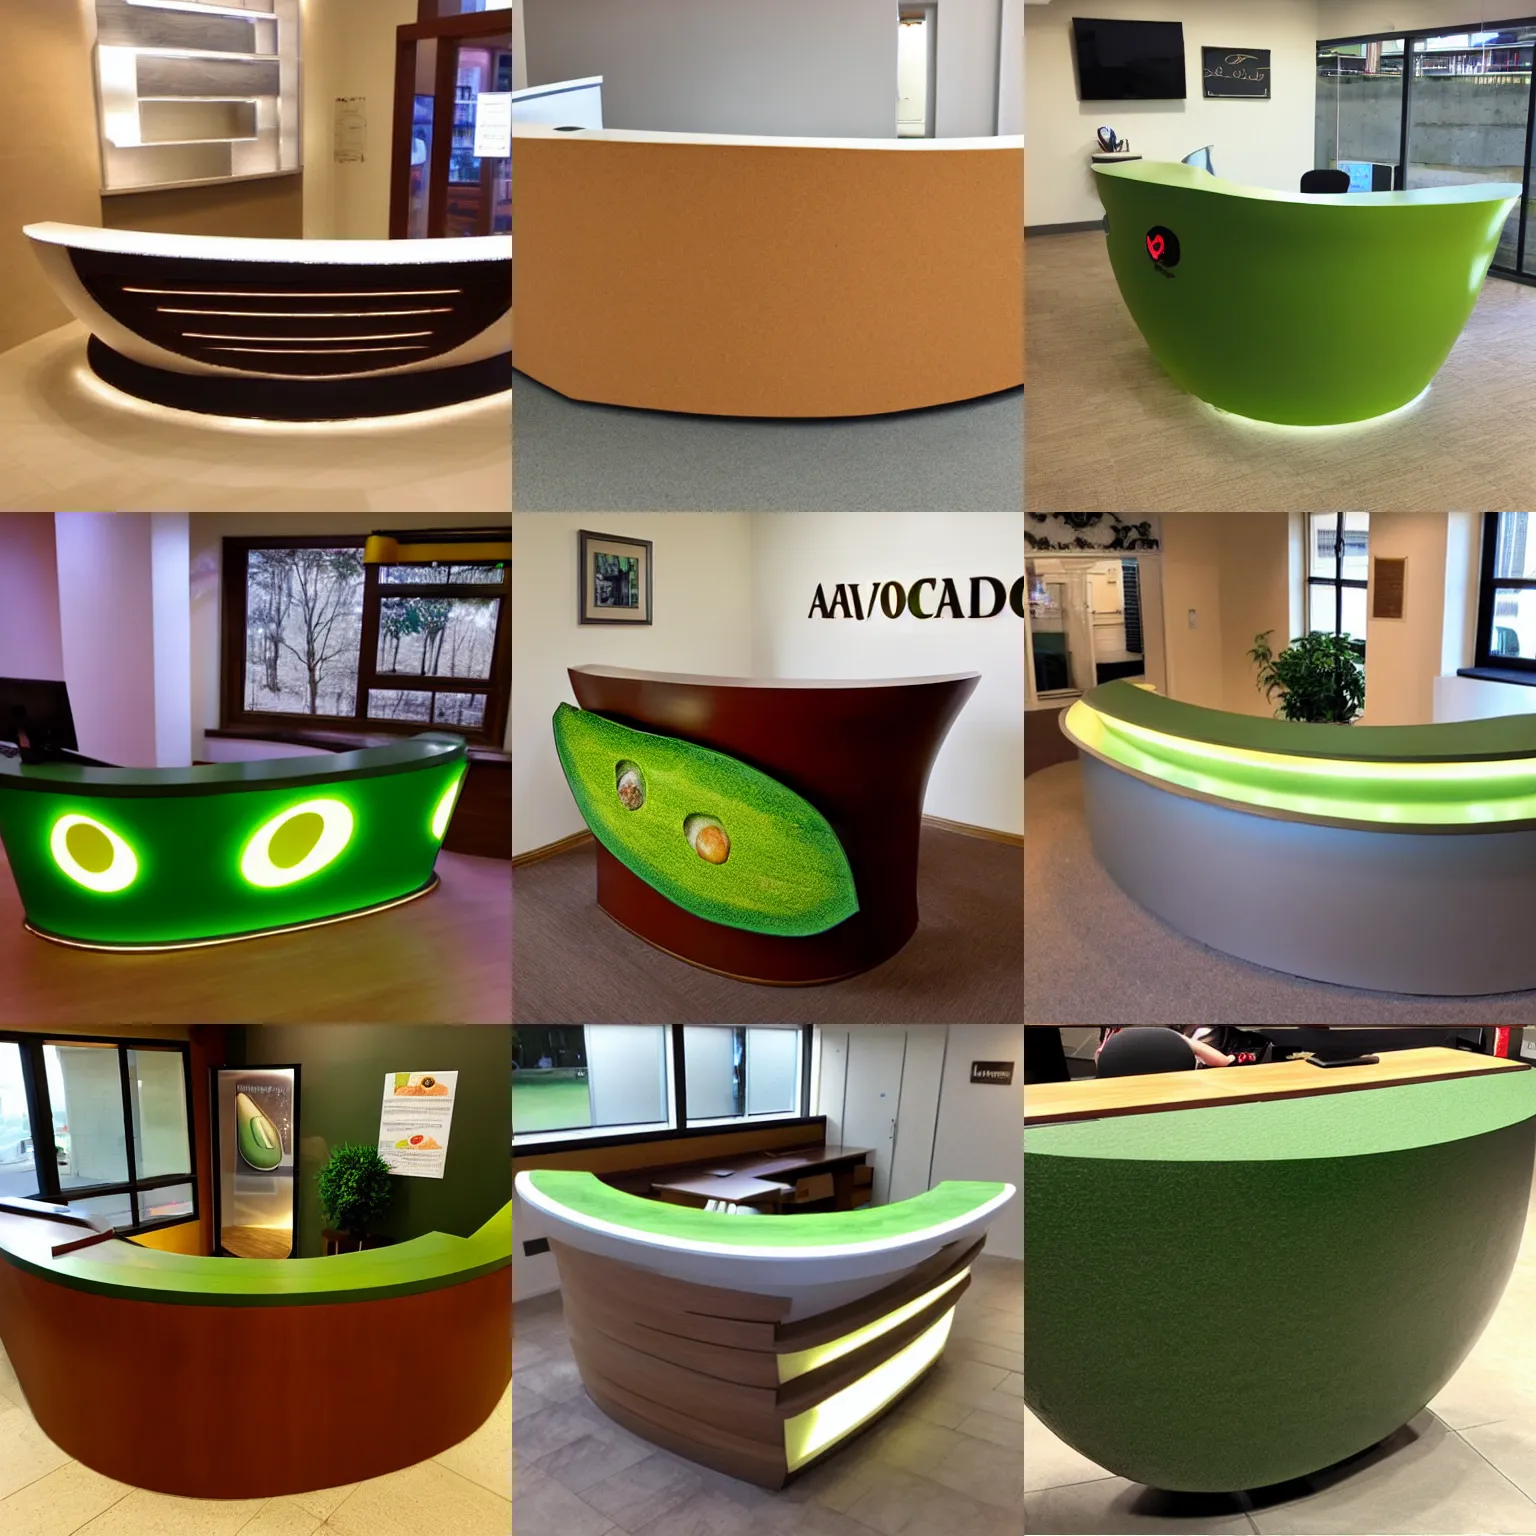 Prompt: Reception Desk shaped like an Avocado